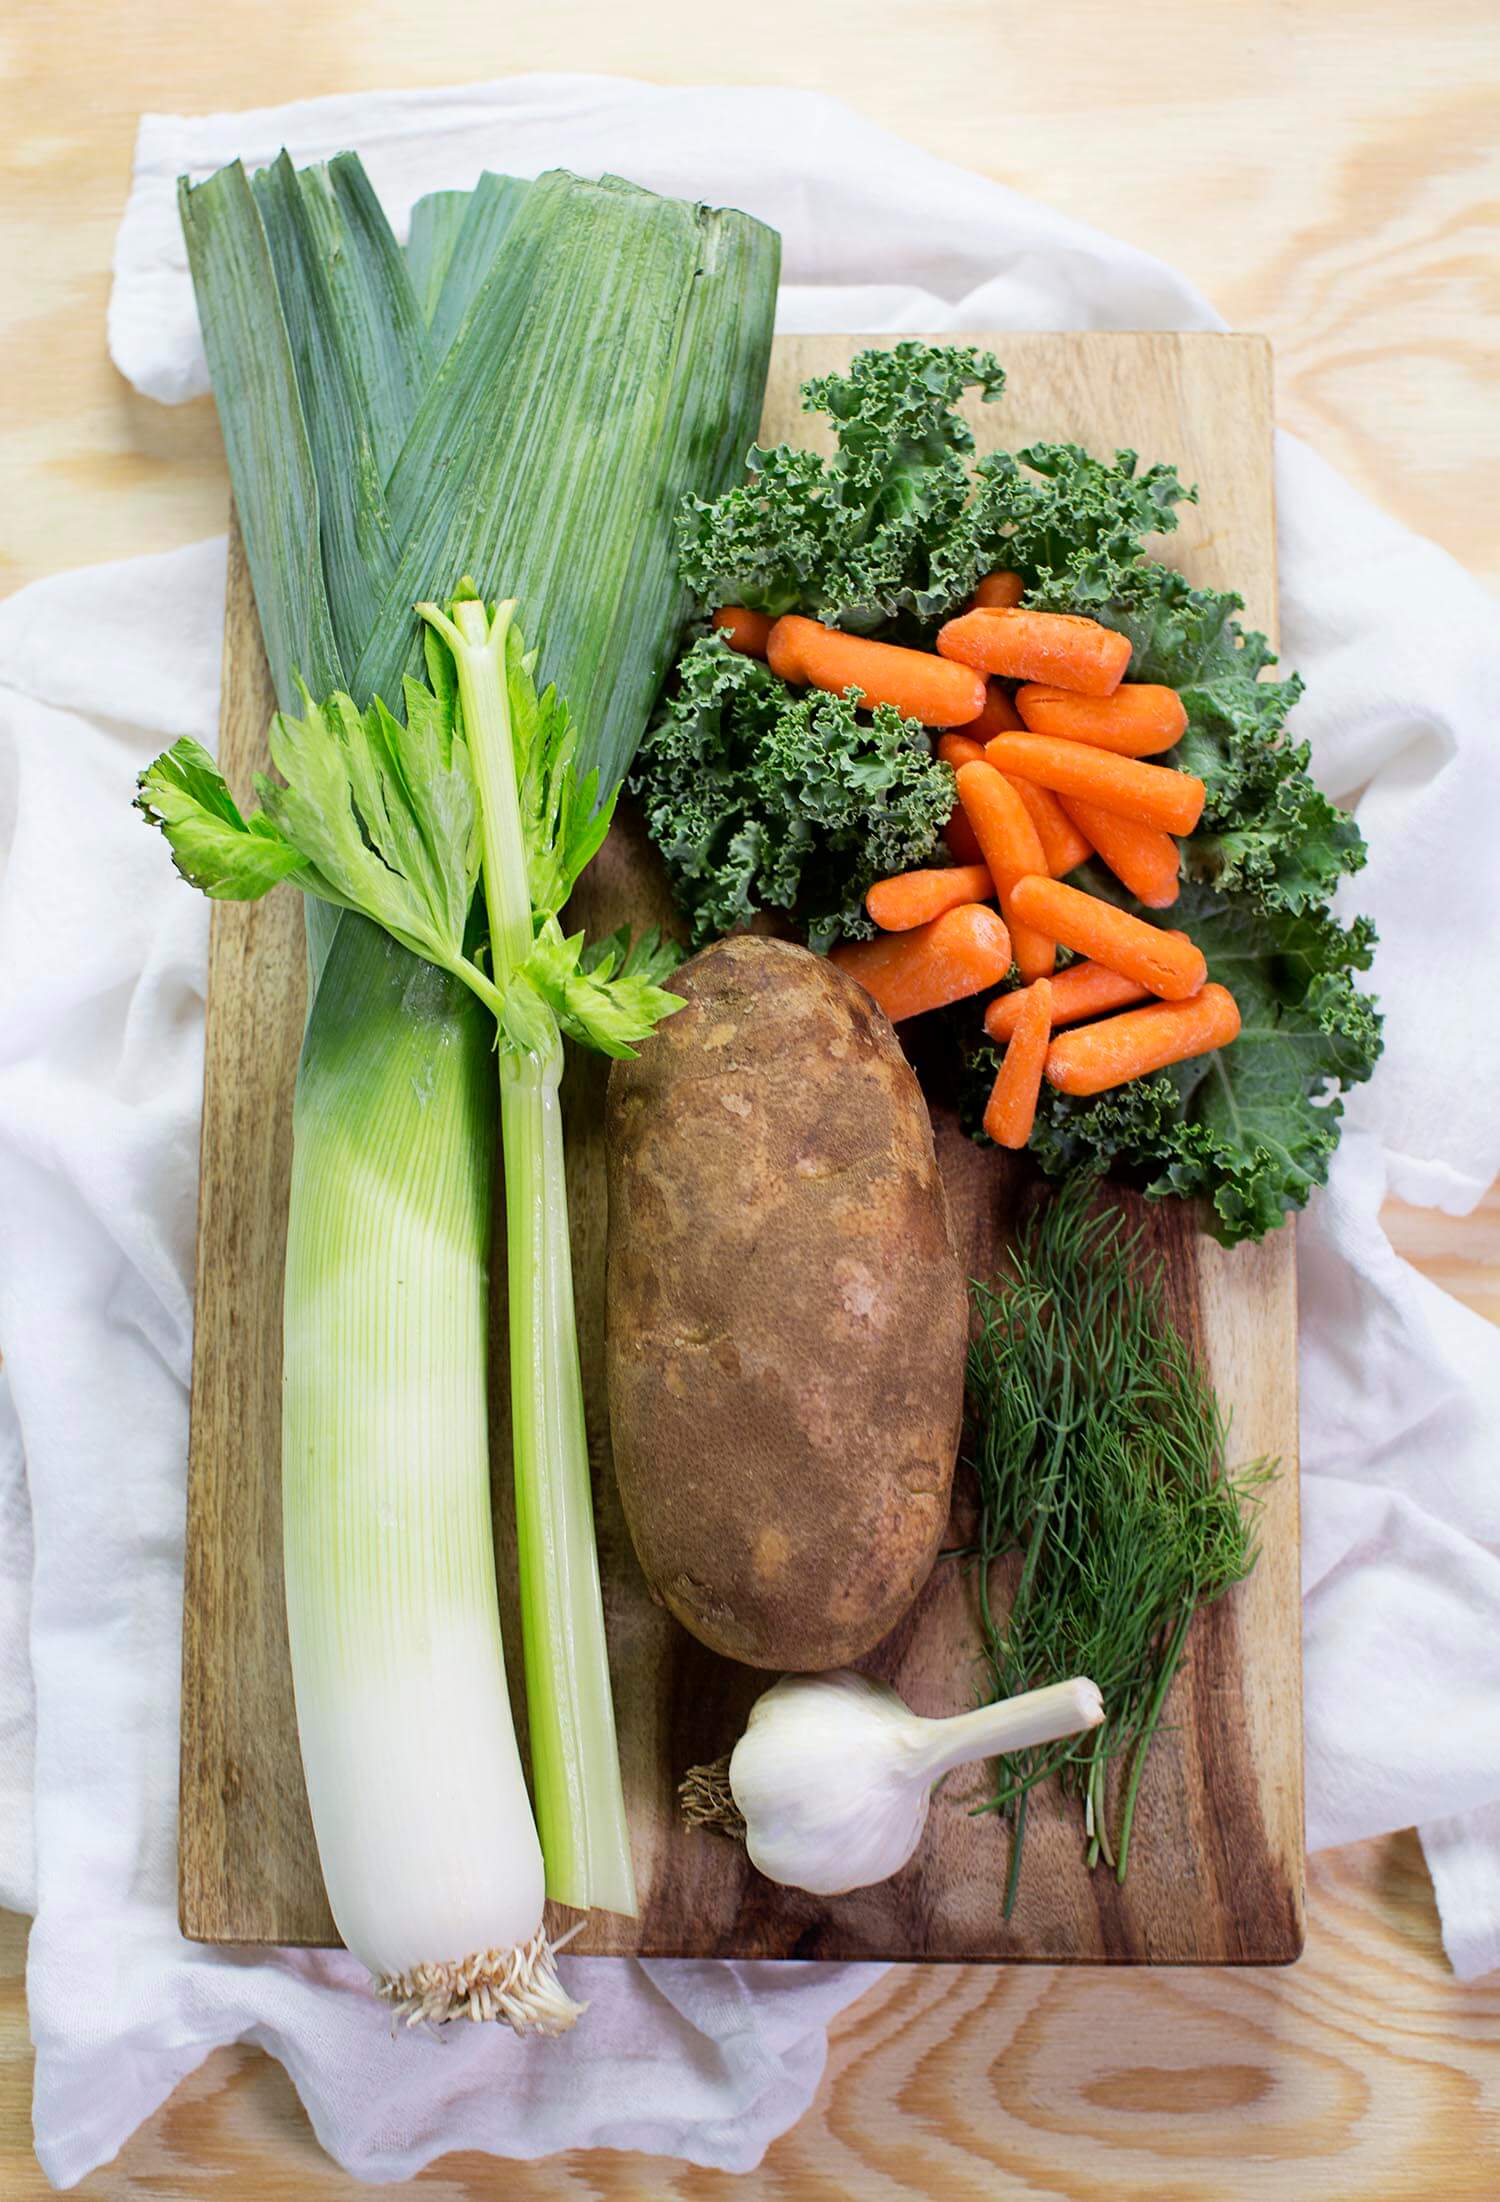 Best vegetable soup recipes